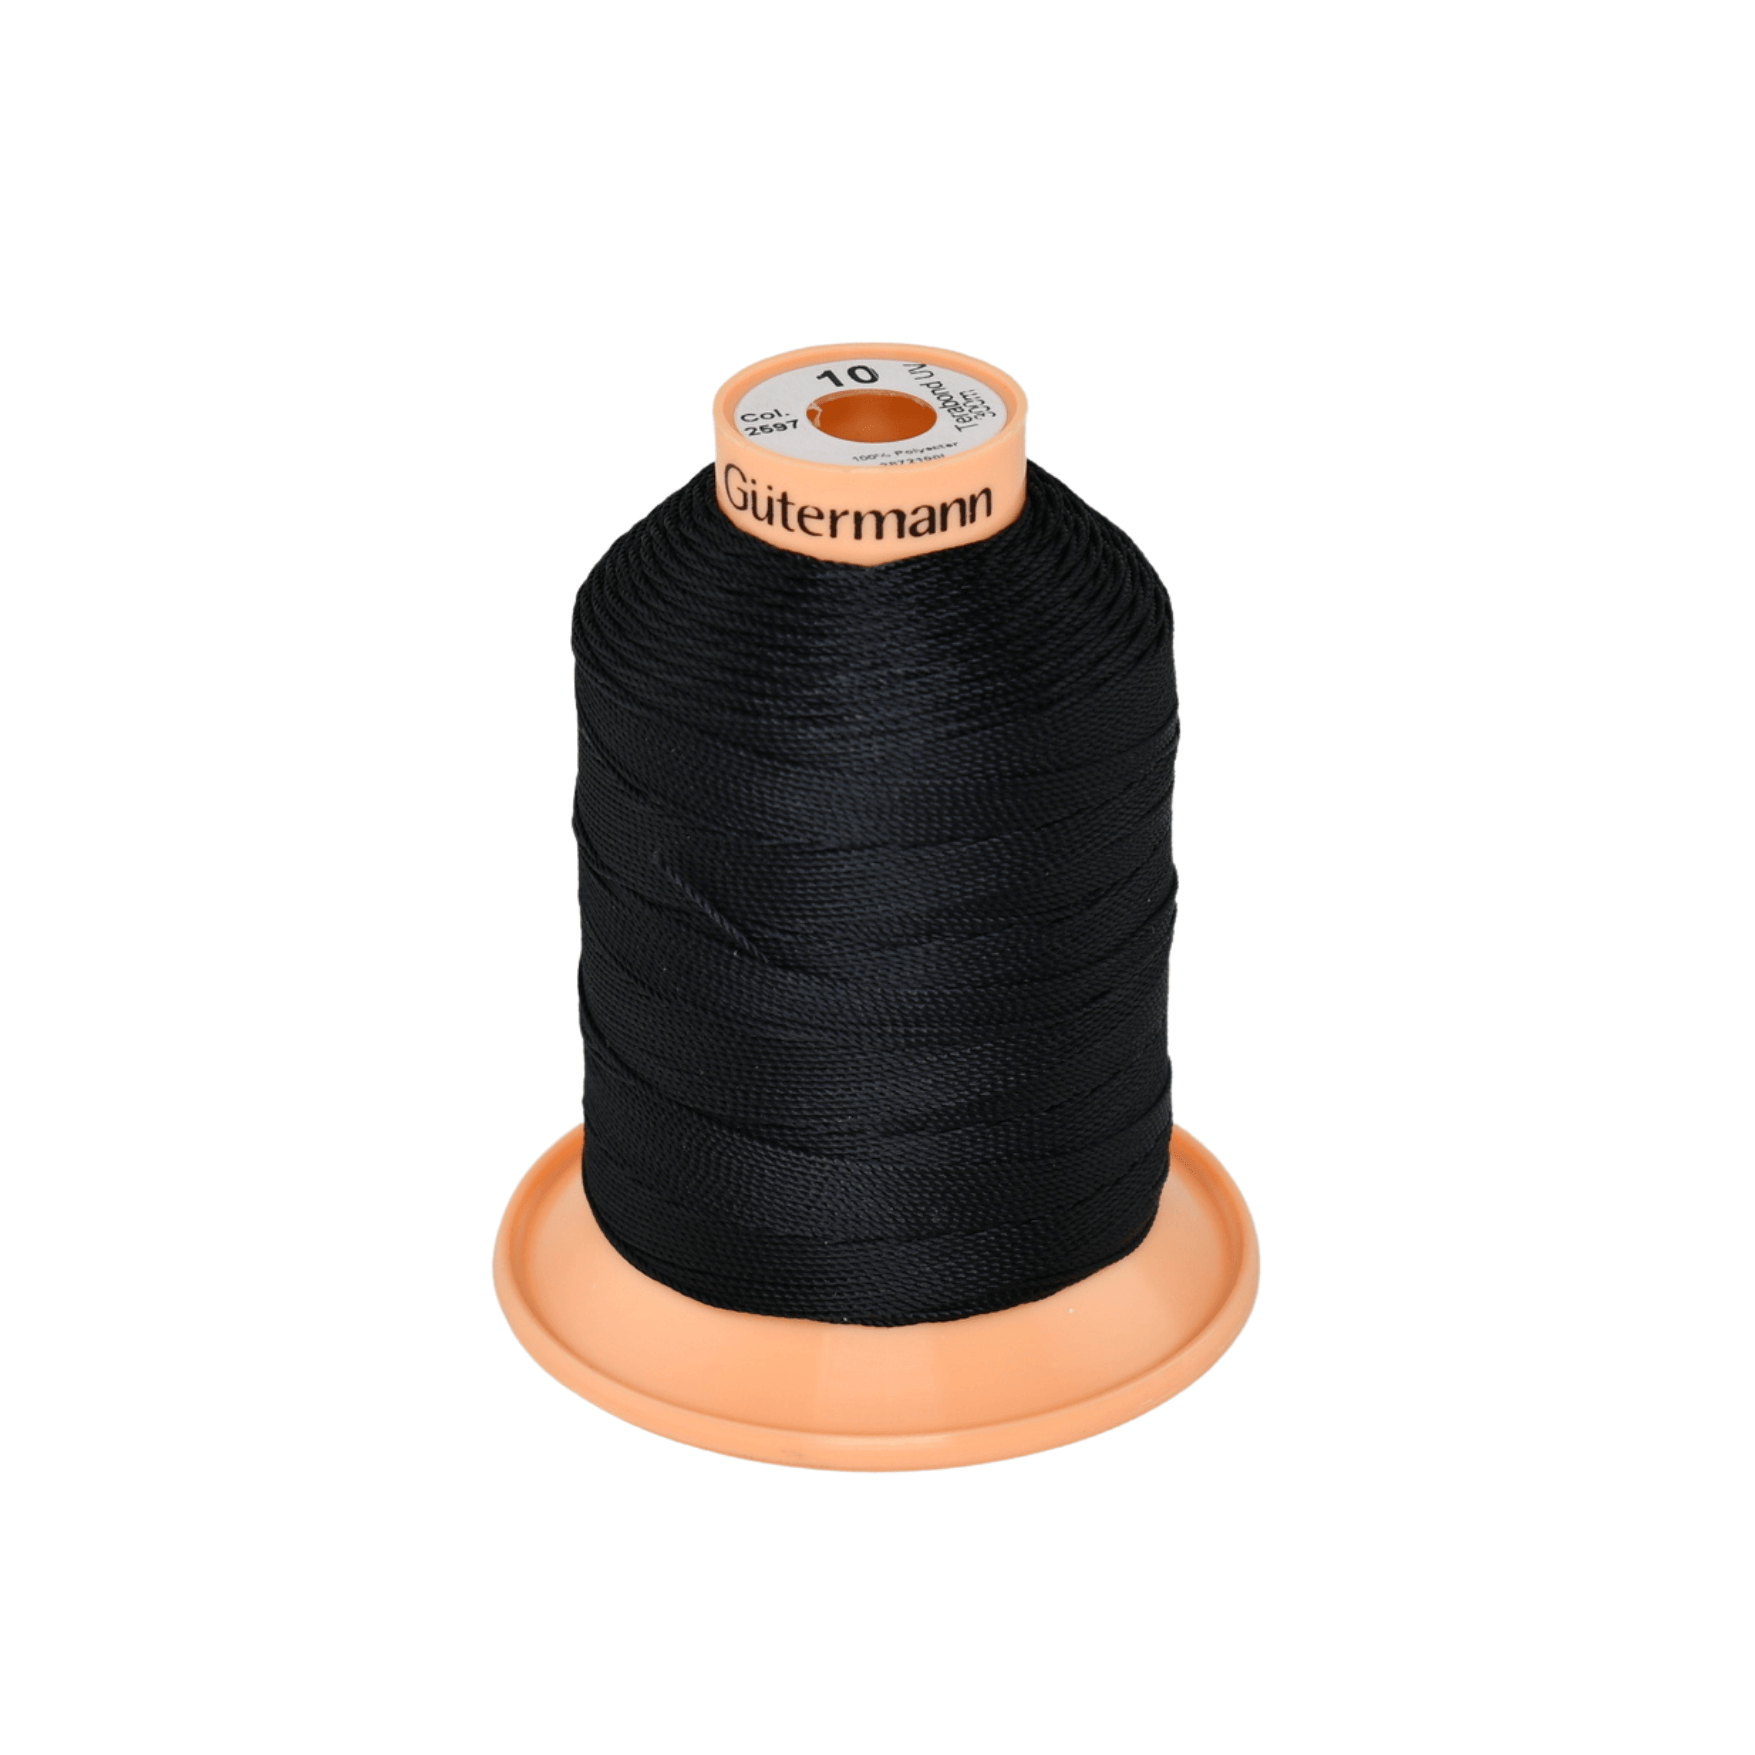 Gutermann Terabond 10 UV stabilised Sewing Thread 300m Black